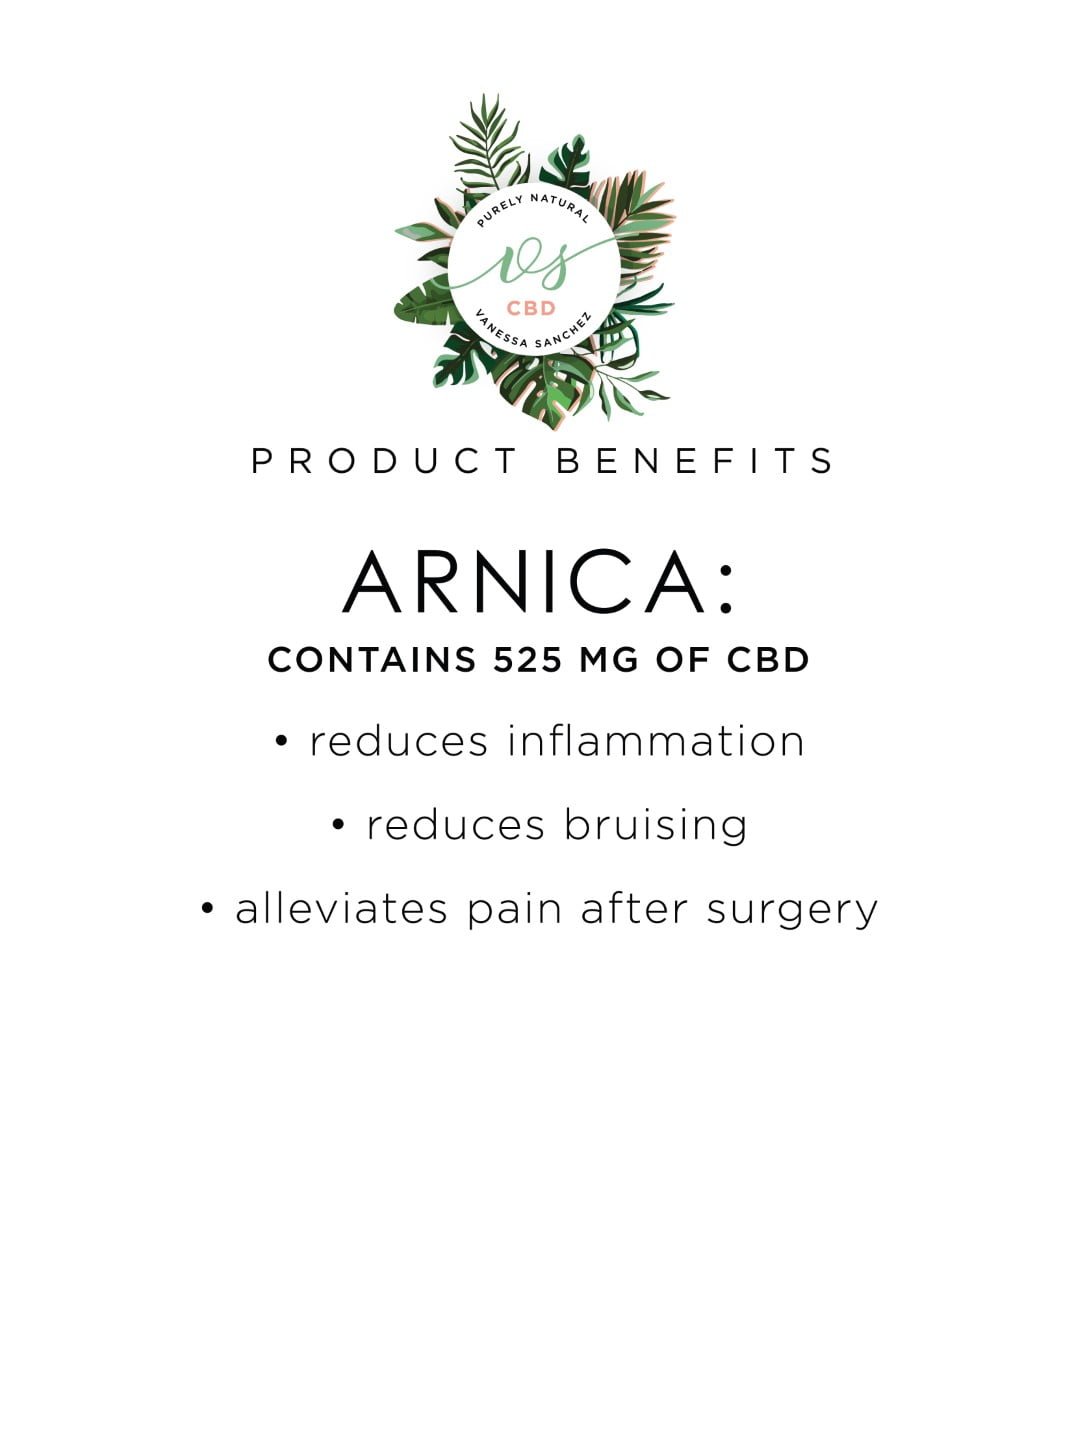 arnica benefits-01 (Large)